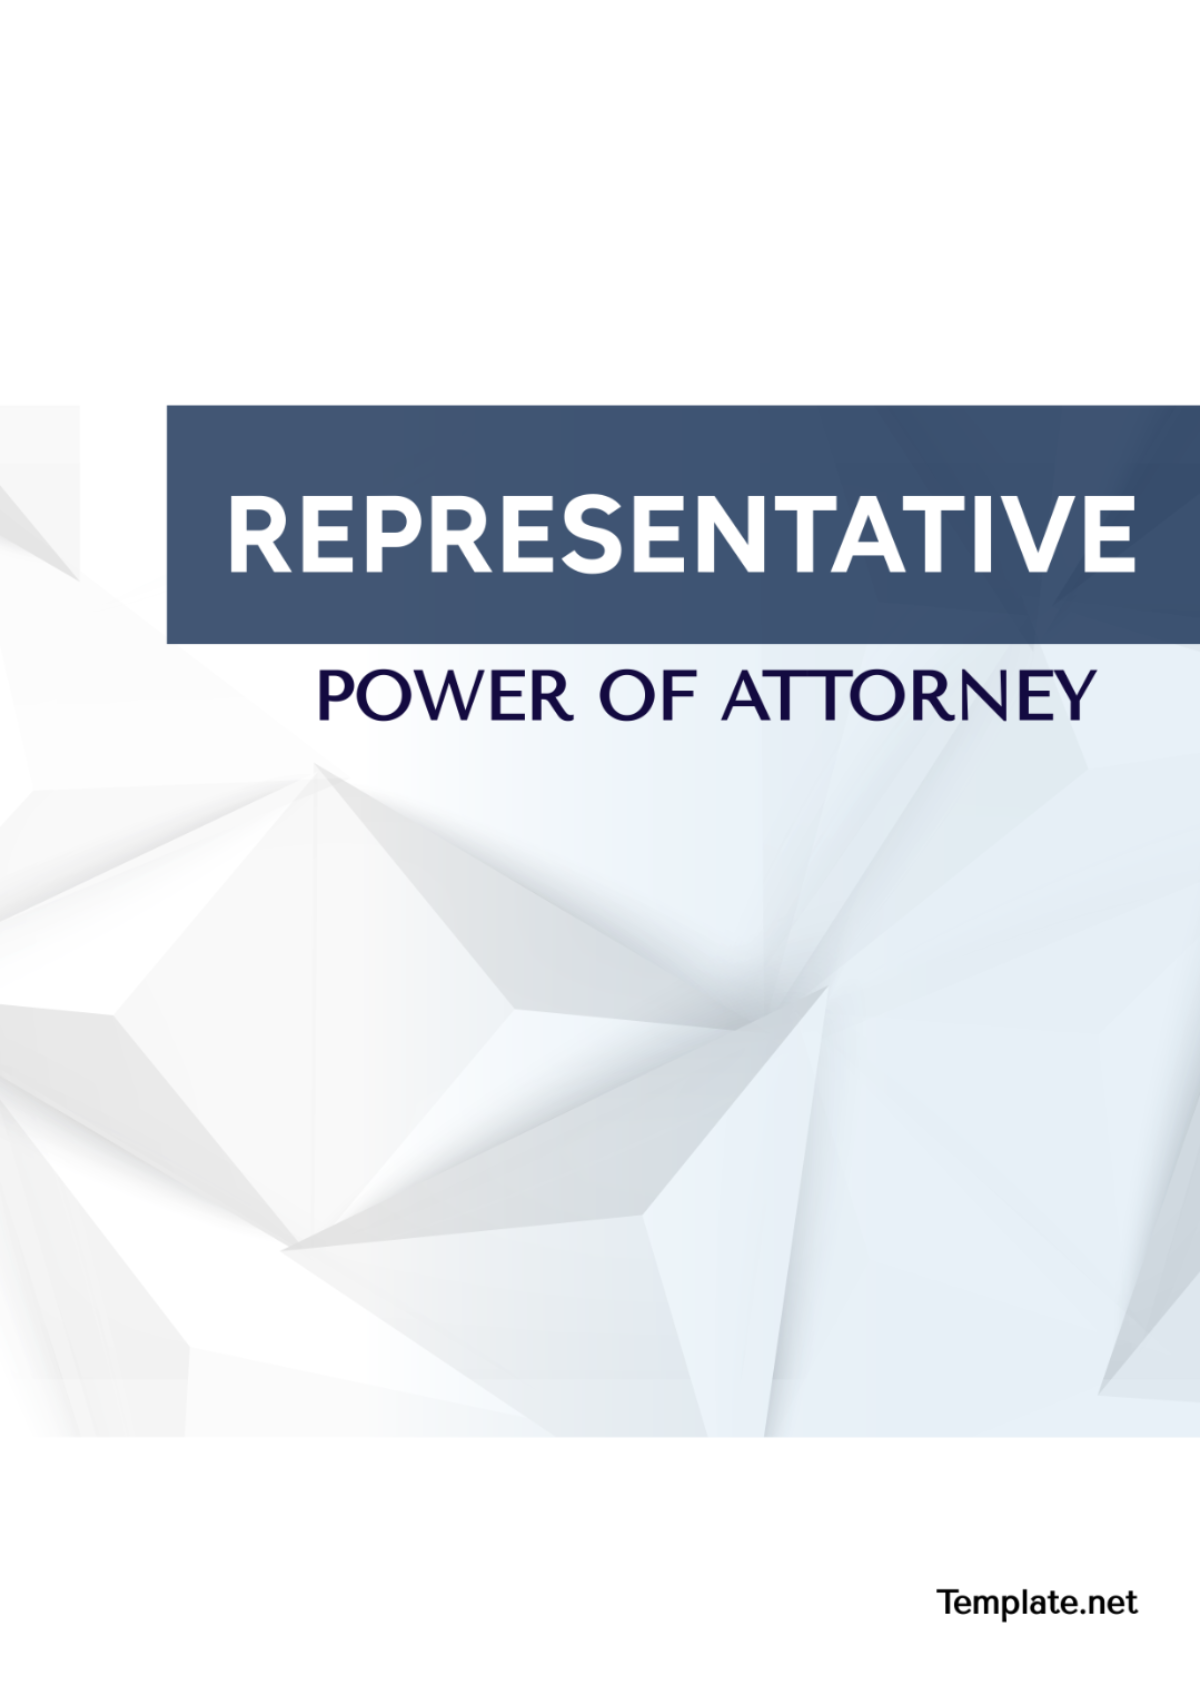 Representative Power of Attorney Template